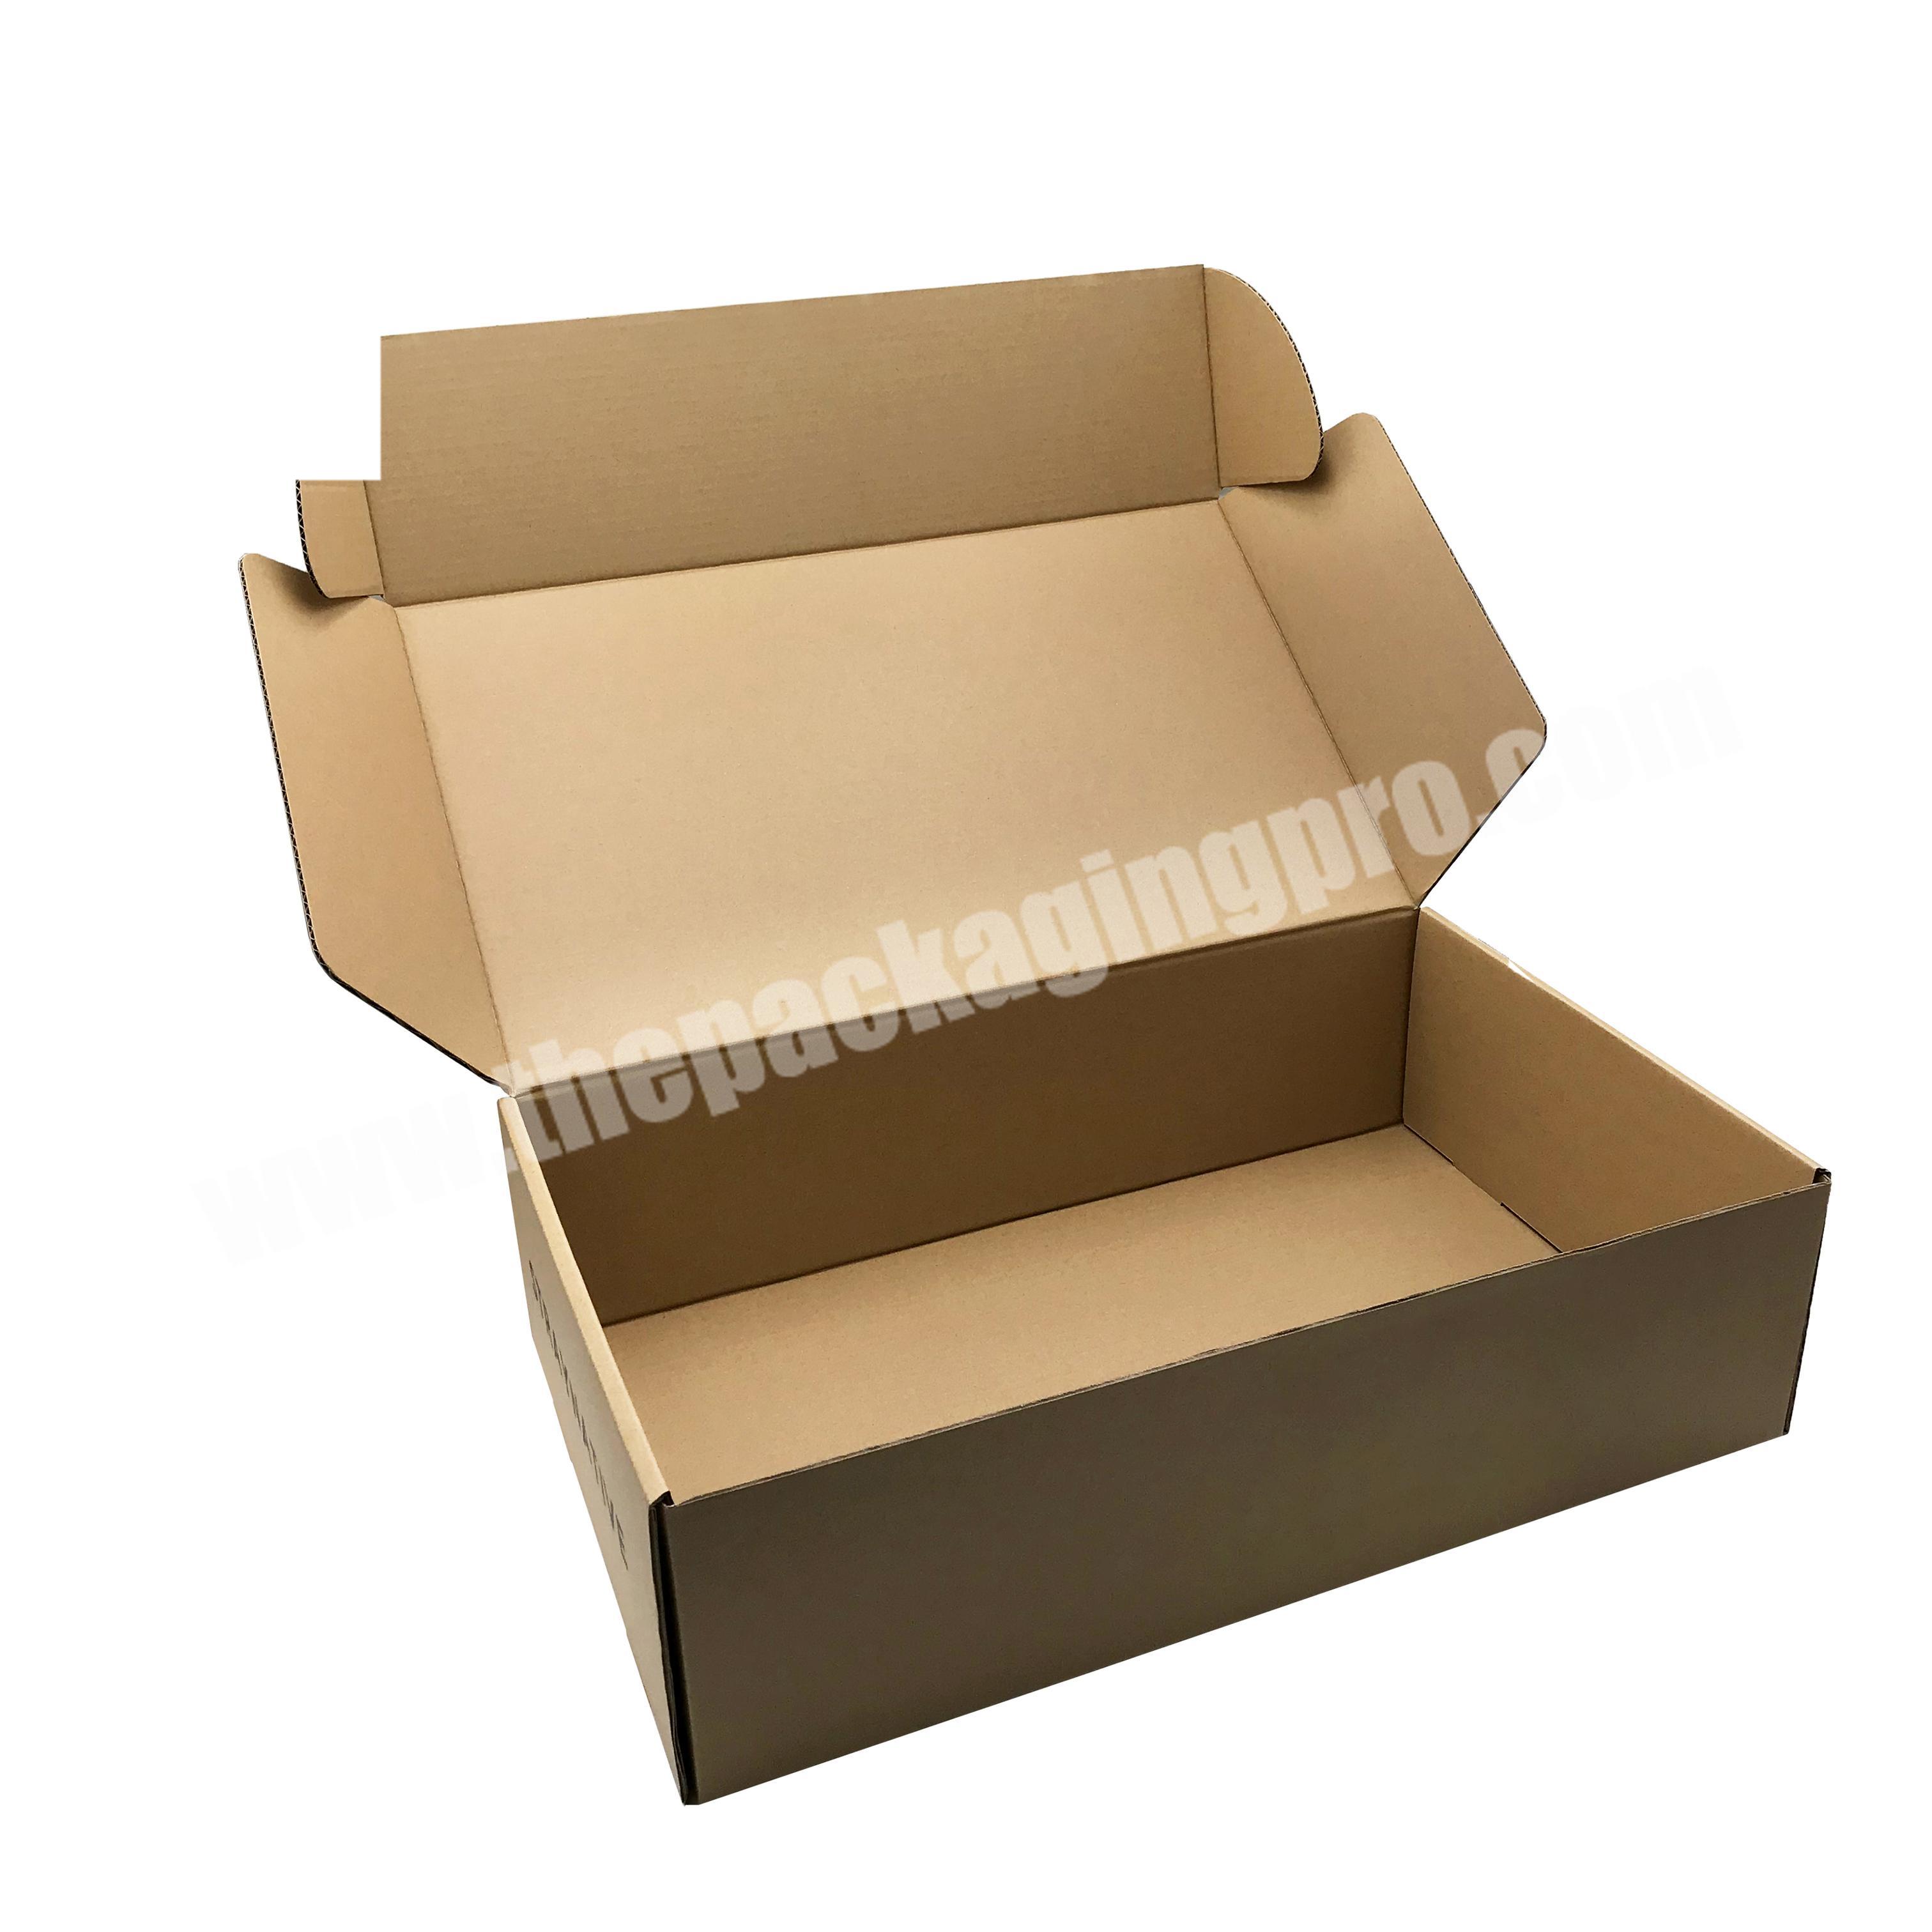 China supplier shipping carton black boxes clothes shawl packaging